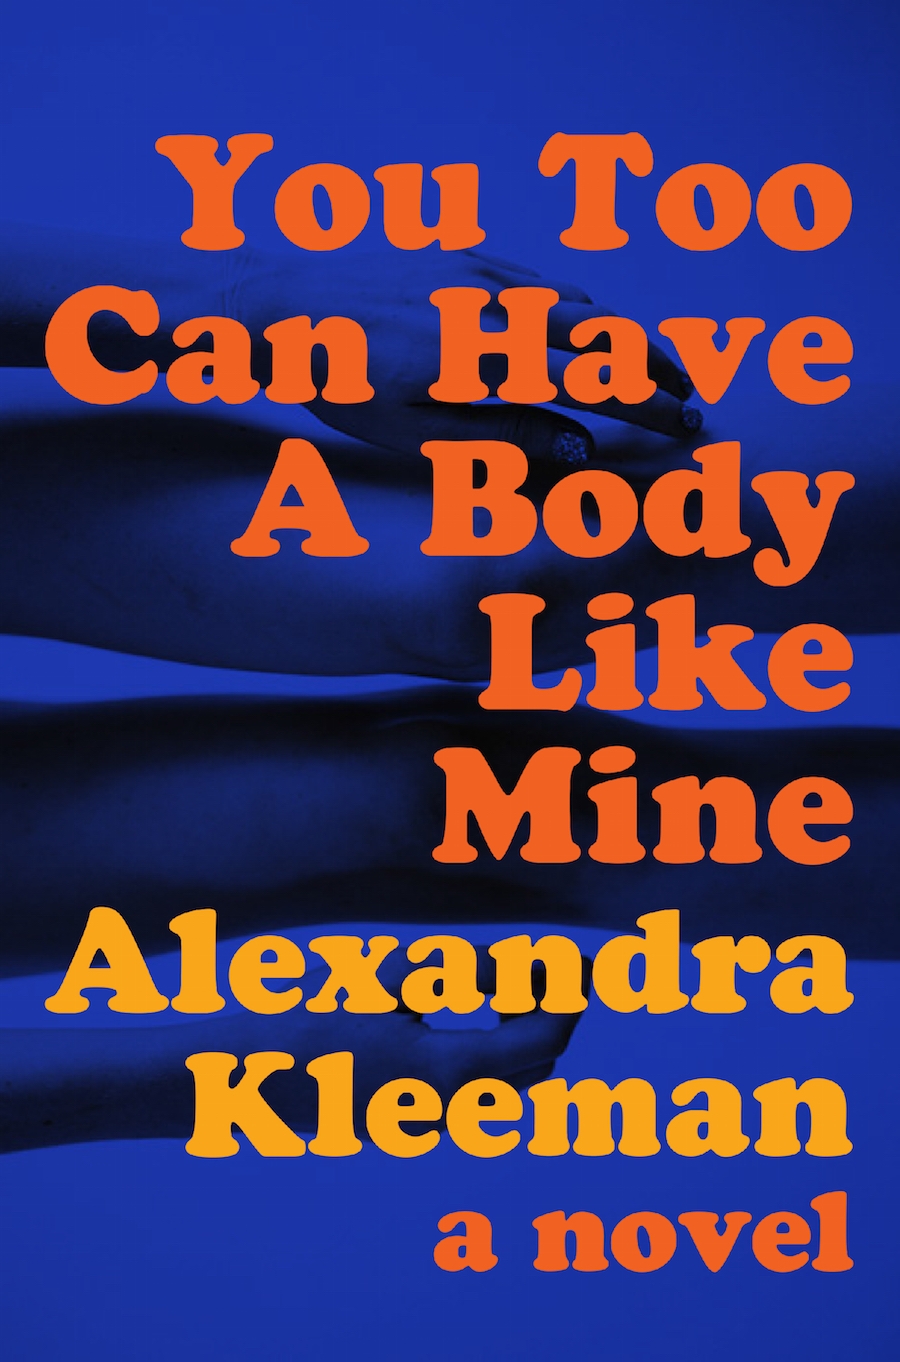 dystopian-debut-novelist-alexandra-kleeman-body-image-1440528220.jpg